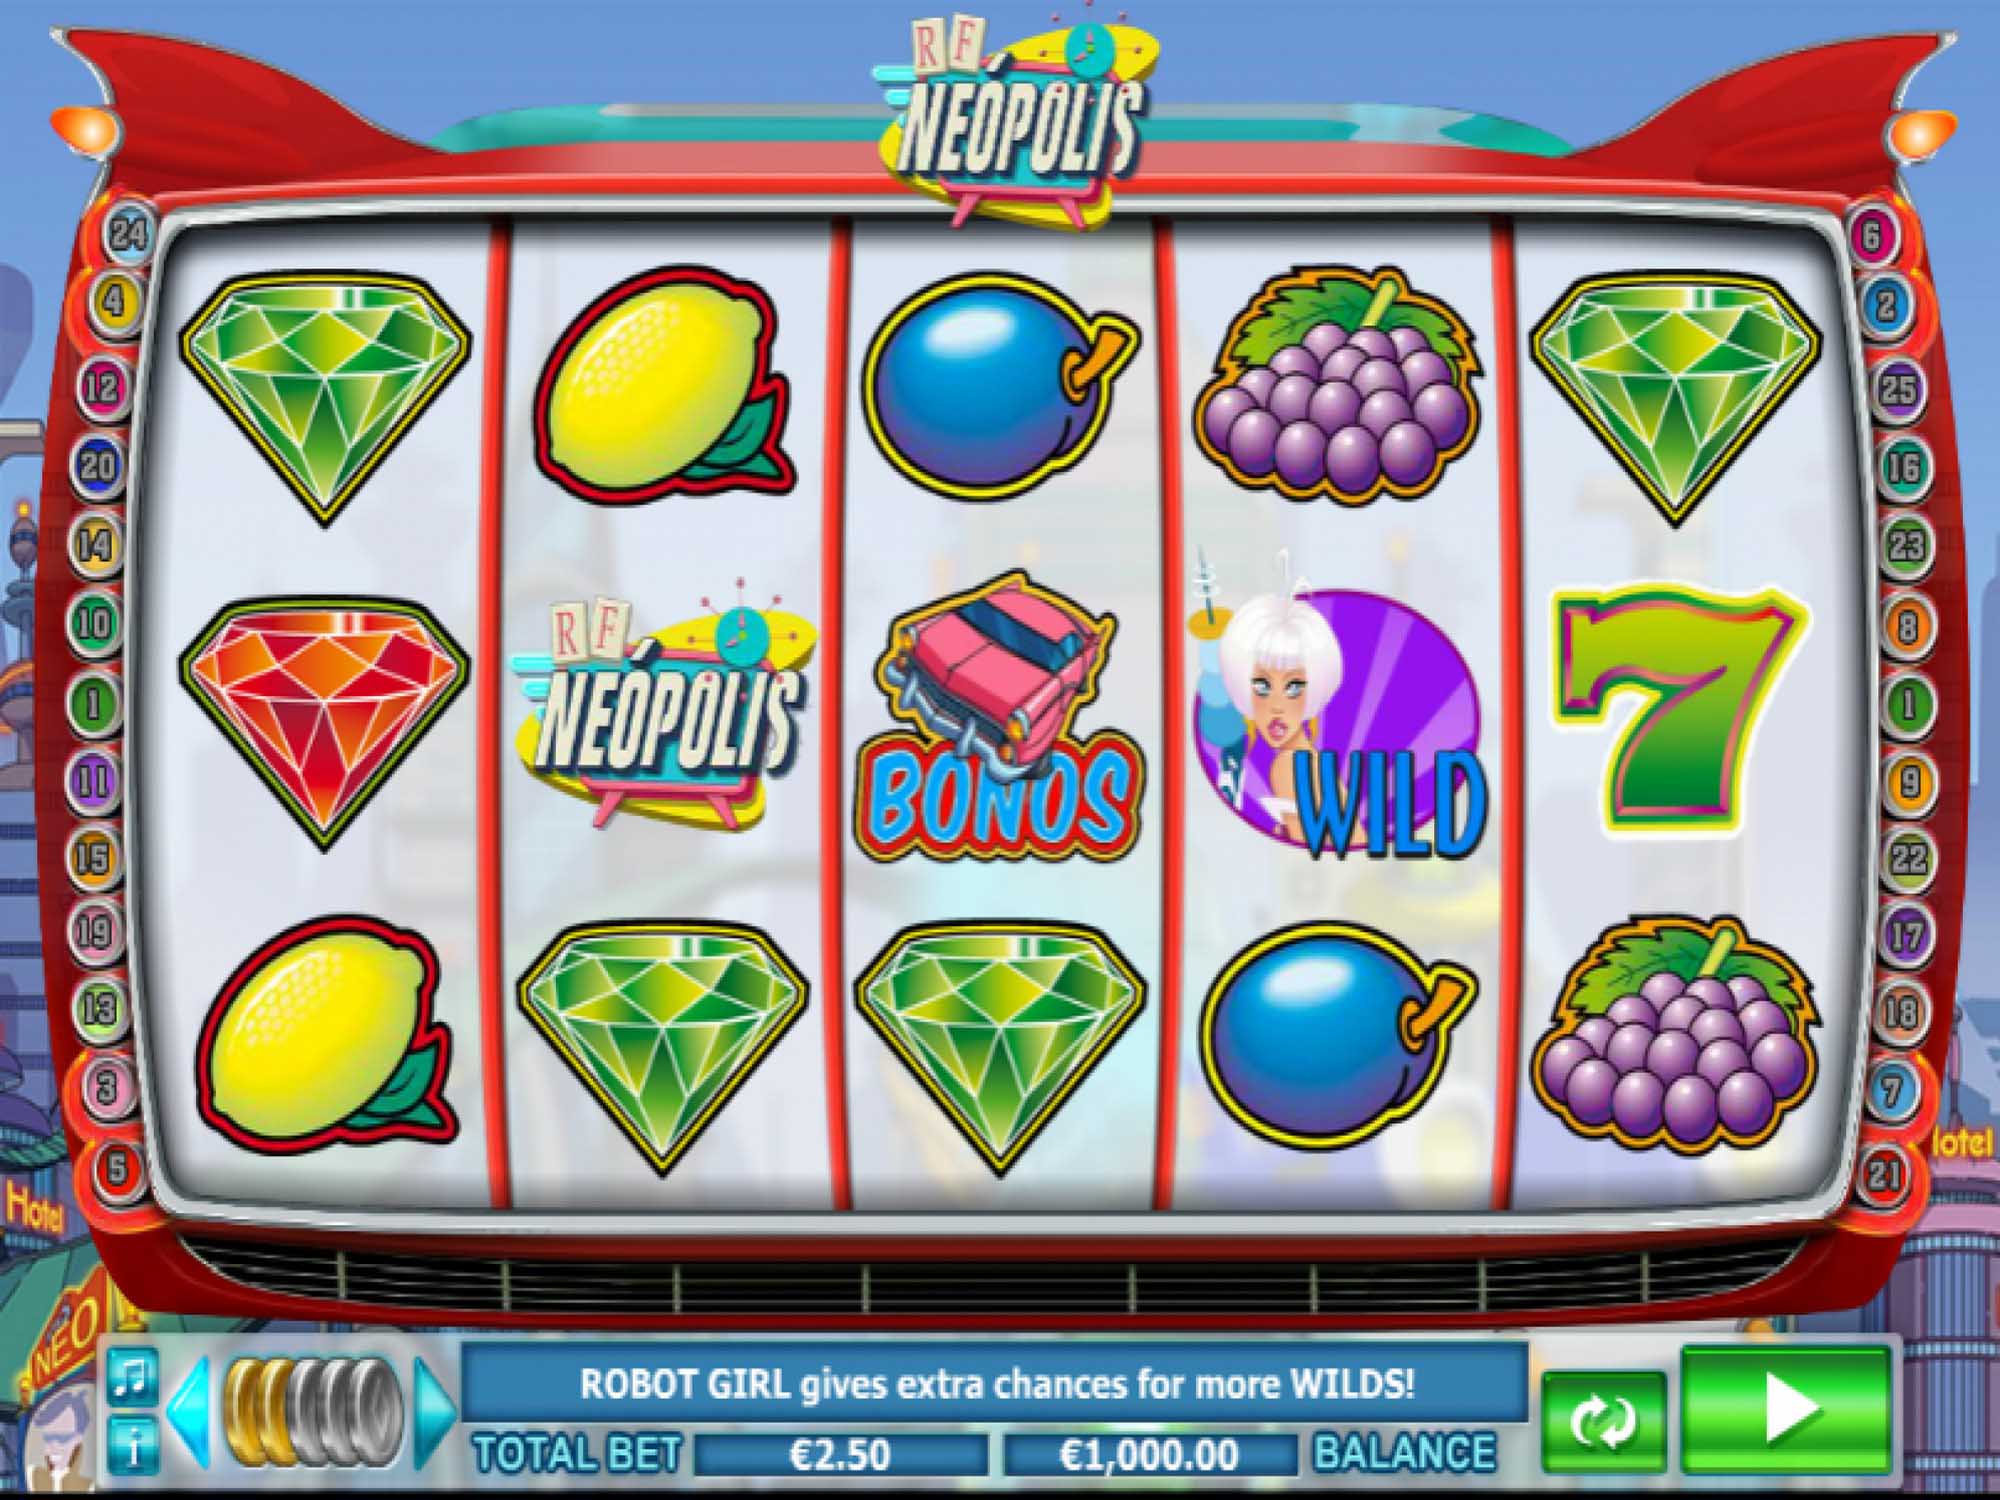 RF Neopolis slot machine screenshot